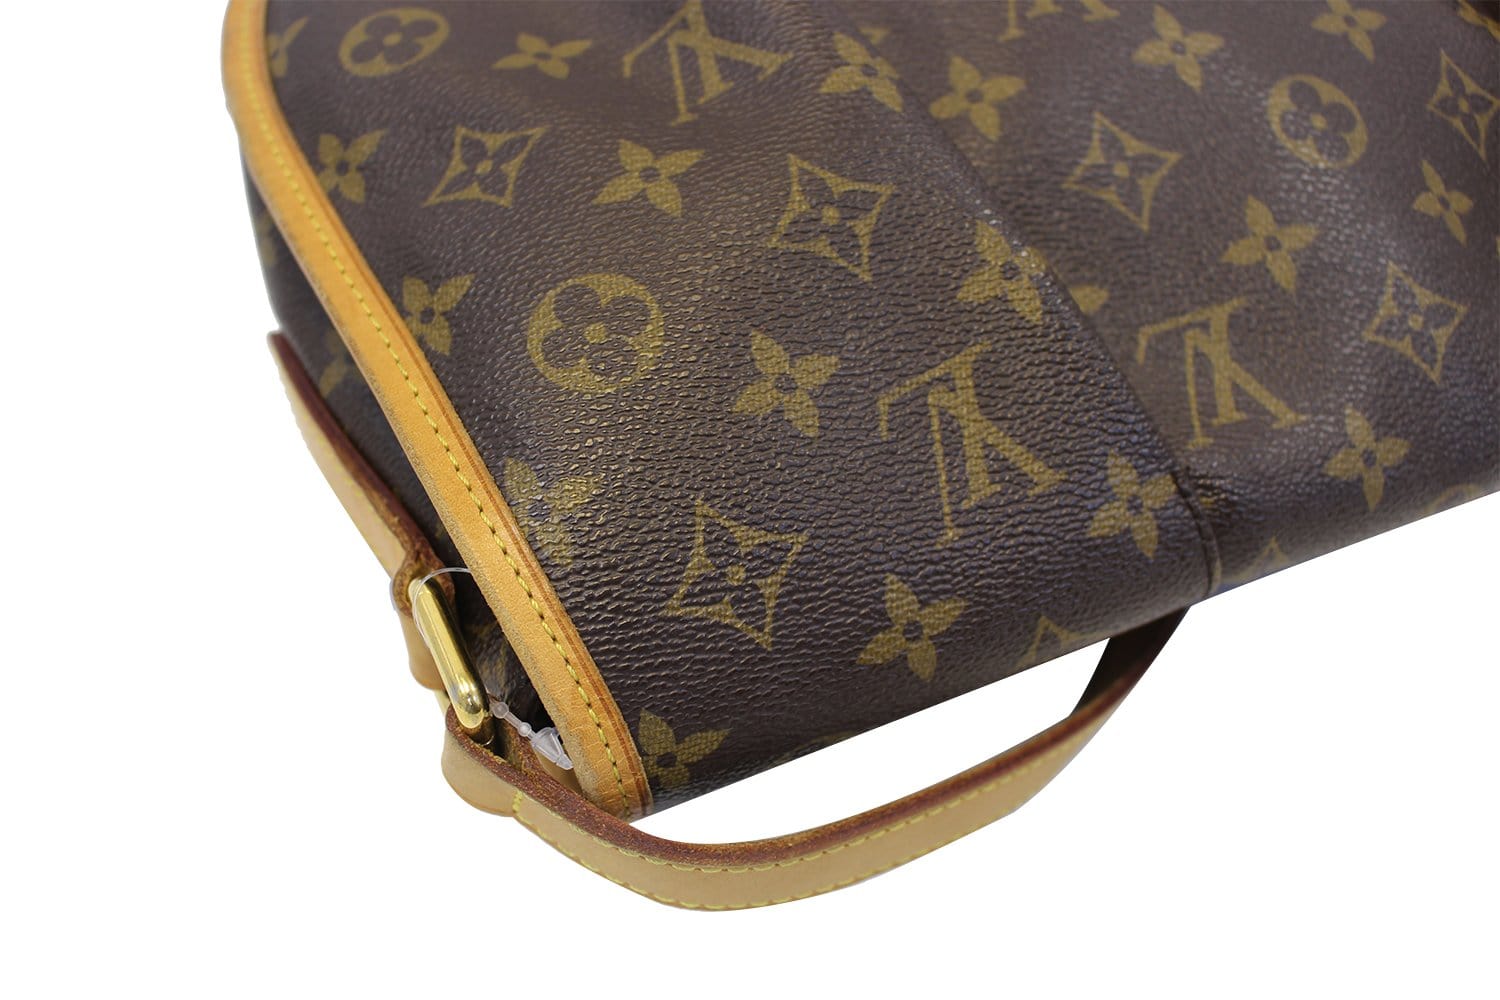 Orsay MM Fashion Leather - Handbags